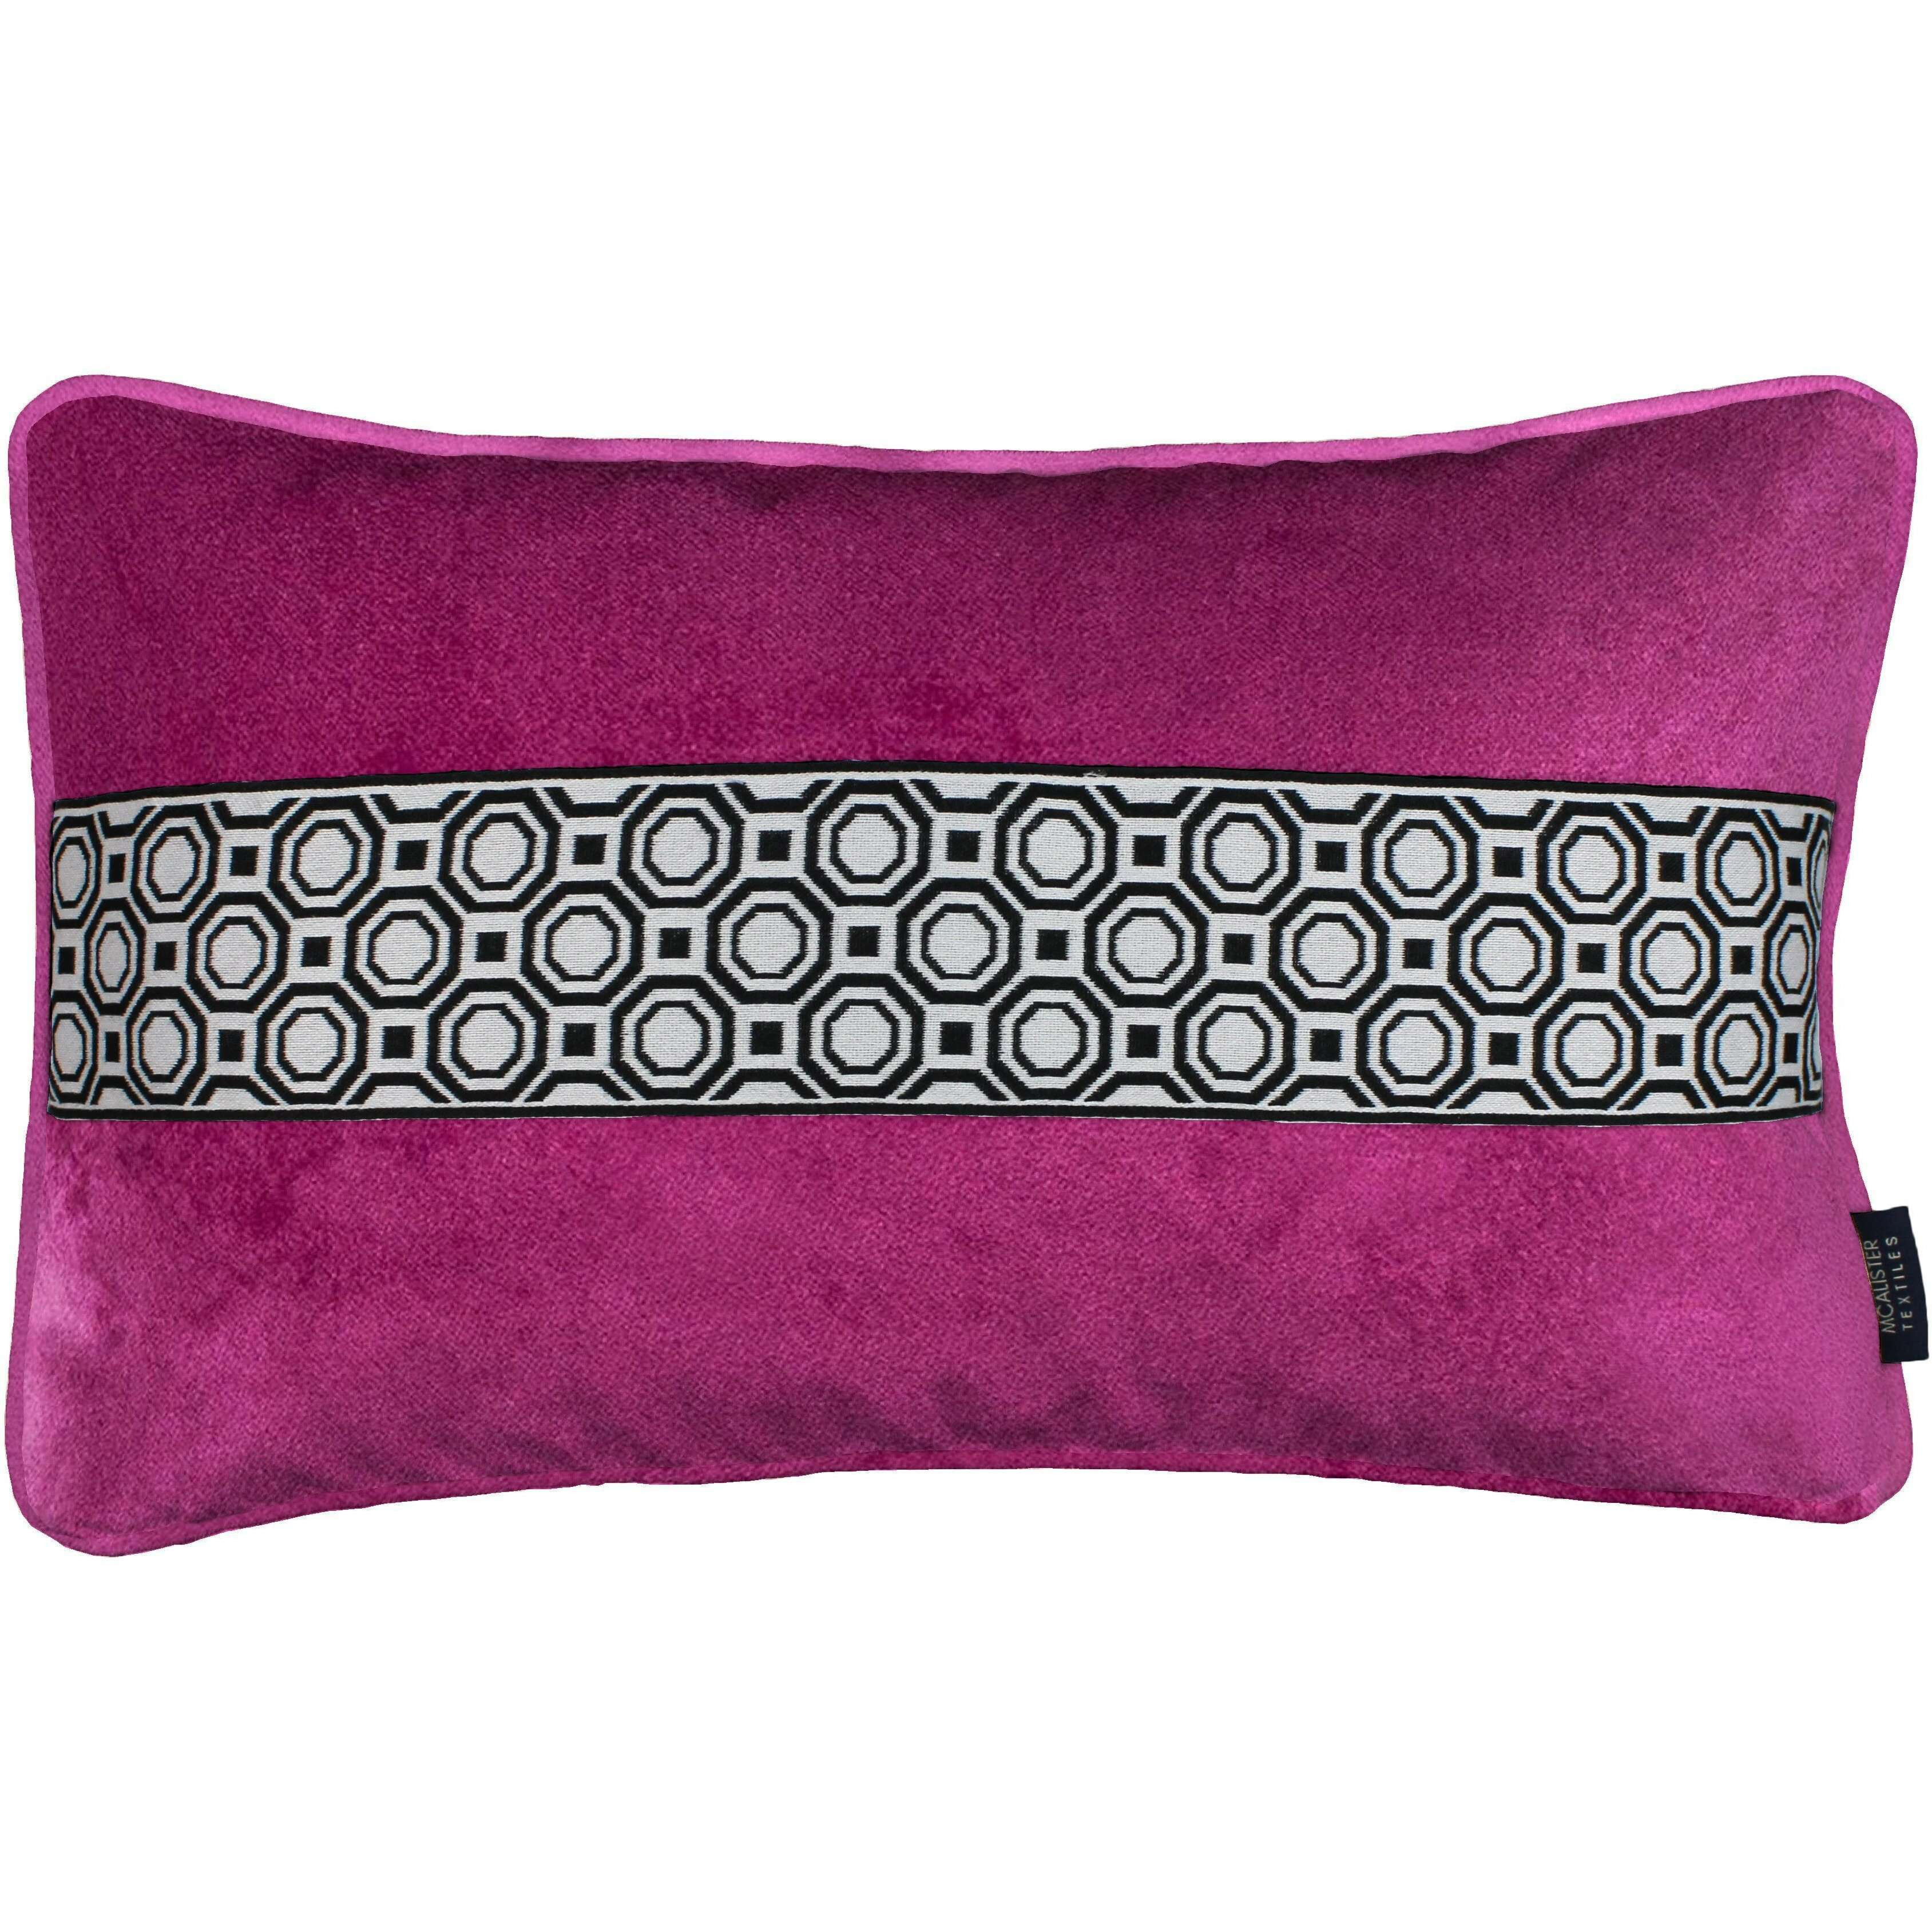 Cancun Striped Fuchsia Pink Velvet Pillow, Cover Only / 50cm x 30cm